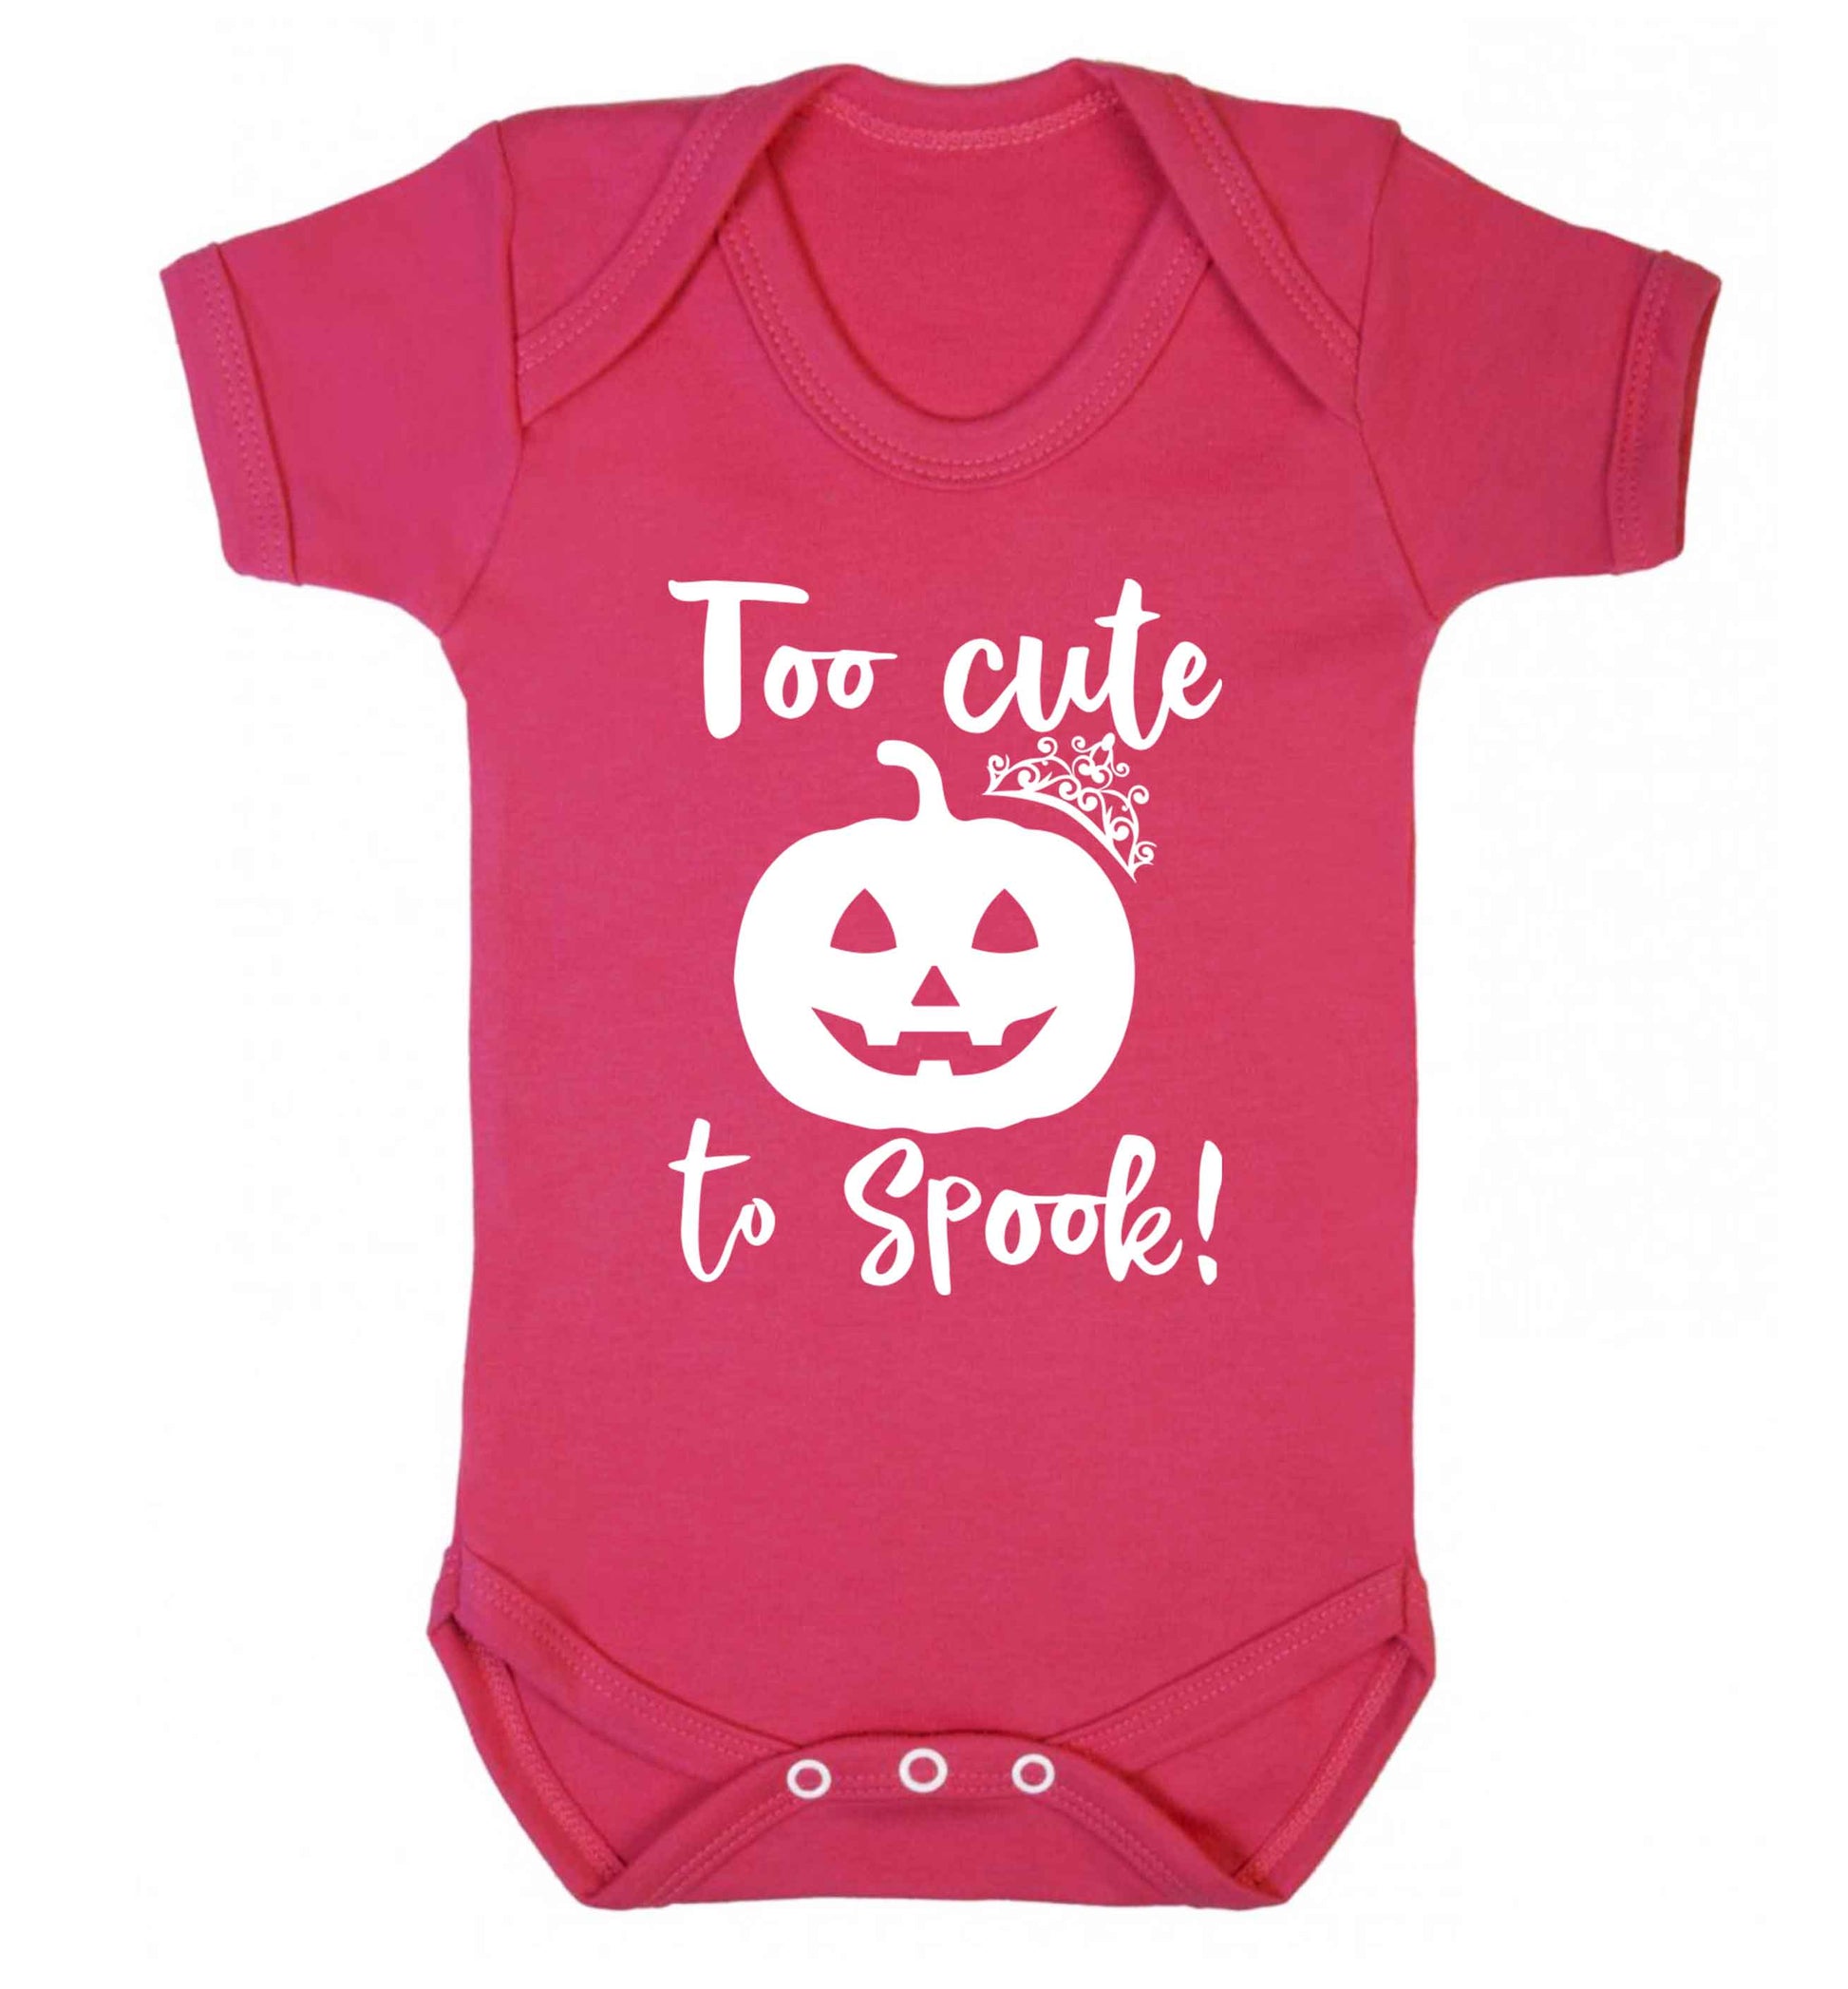 Too cute to spook! Baby Vest dark pink 18-24 months